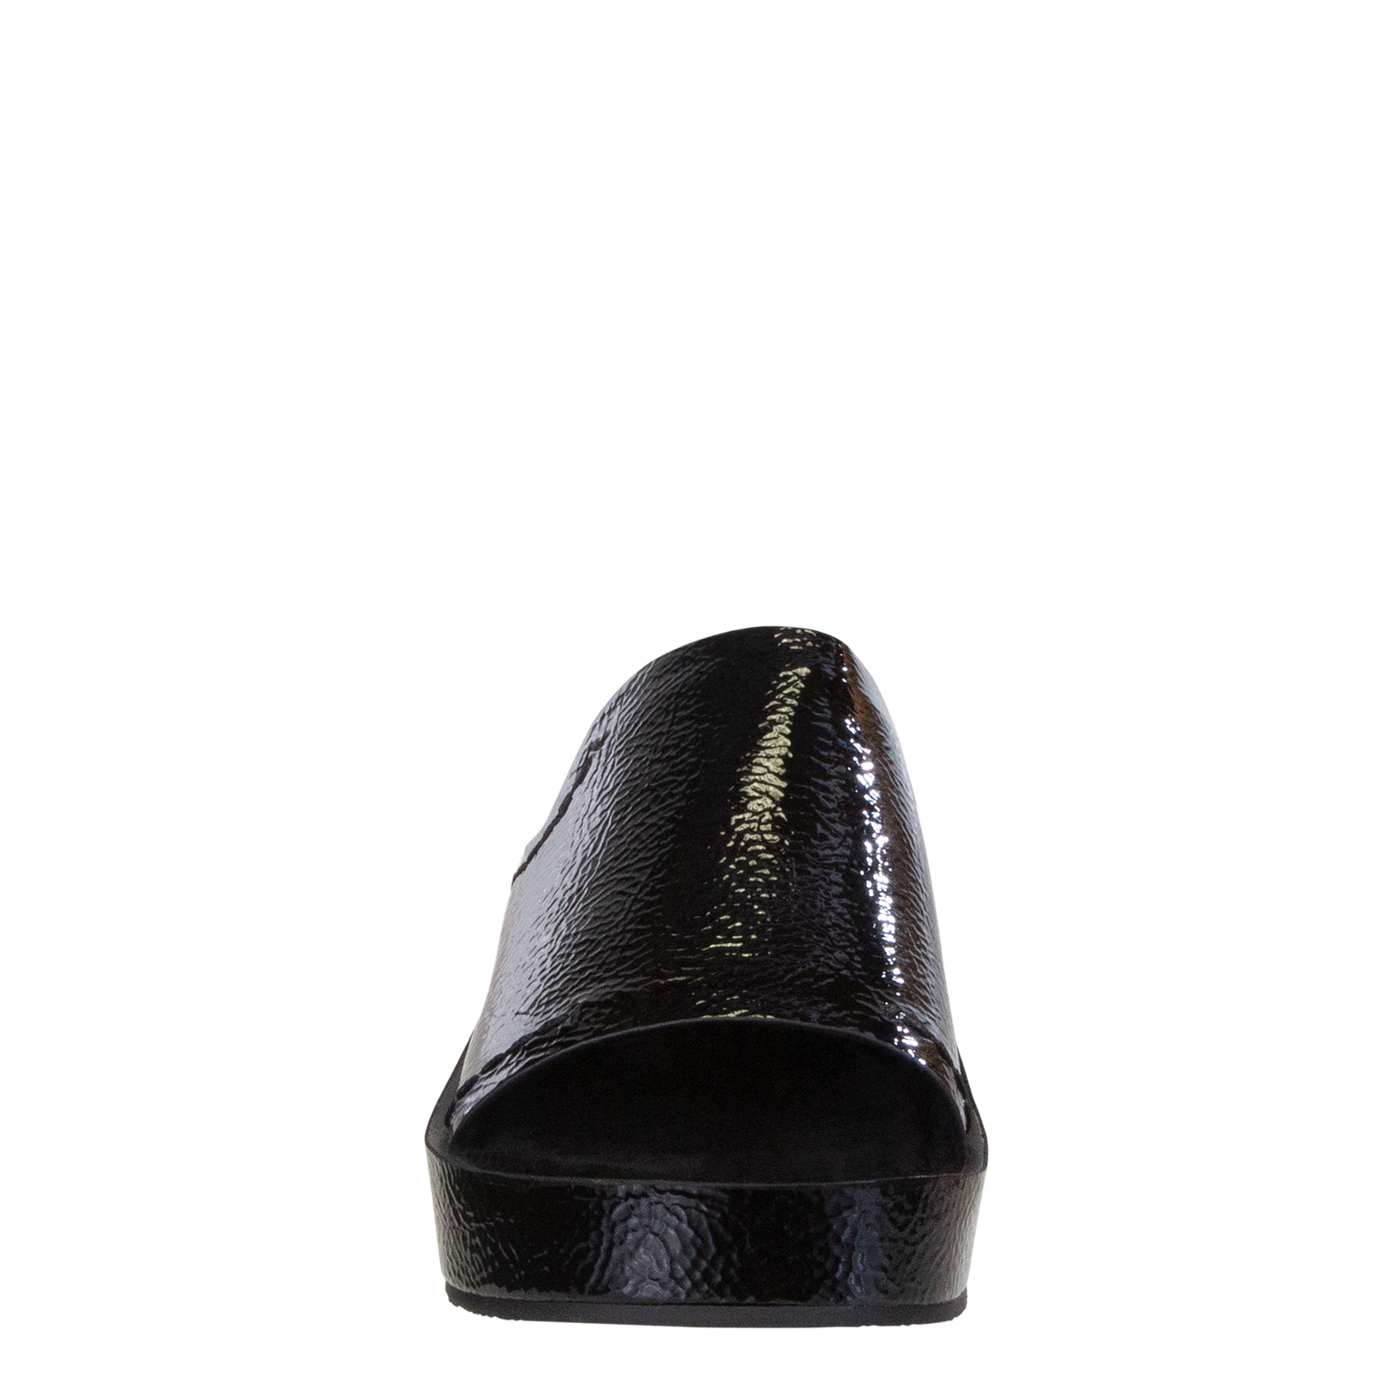 NAKED FEET - RENO in BLACK PATENT Platform Sandals